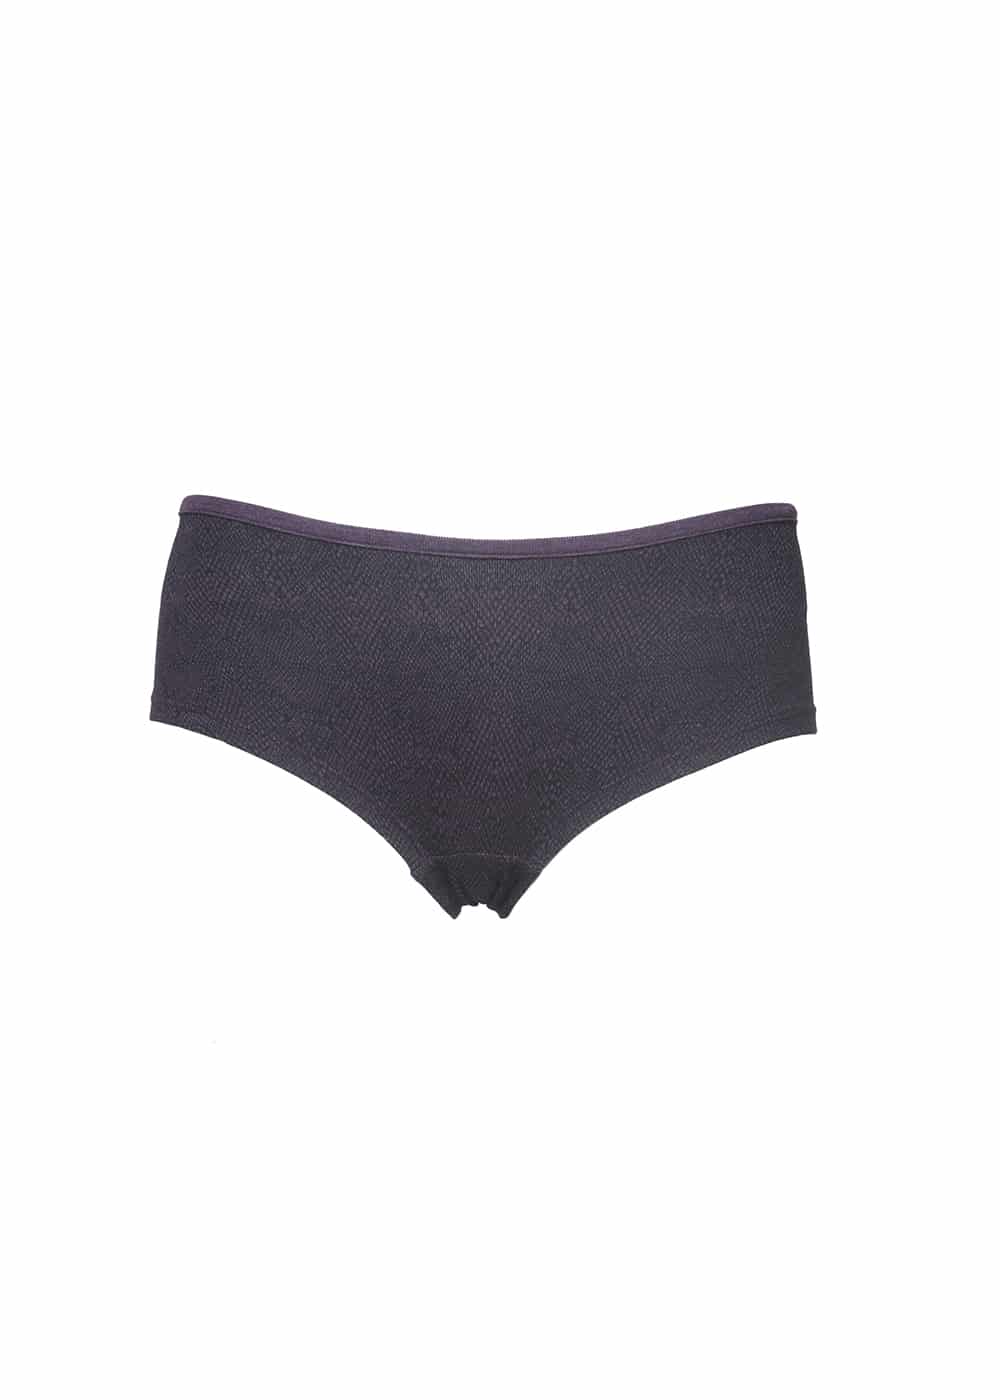 Nomads Hemp Wear Bamboo Temptress Underwear in purple python print, womens ethical sustainable fashion brand Tantrika Australia